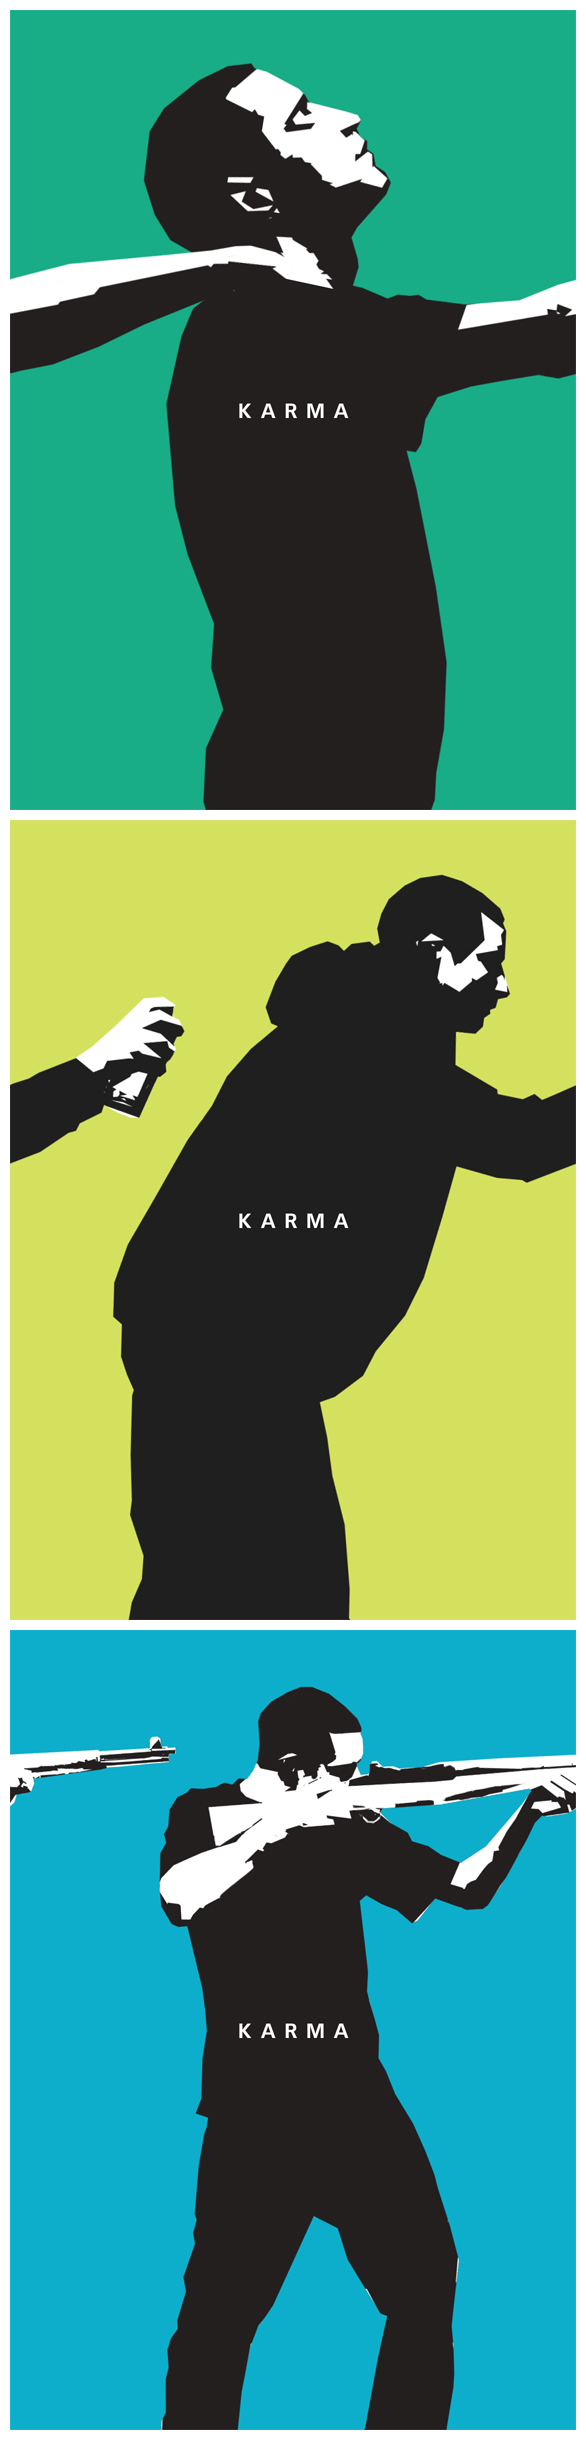 vsvu_karma.posters